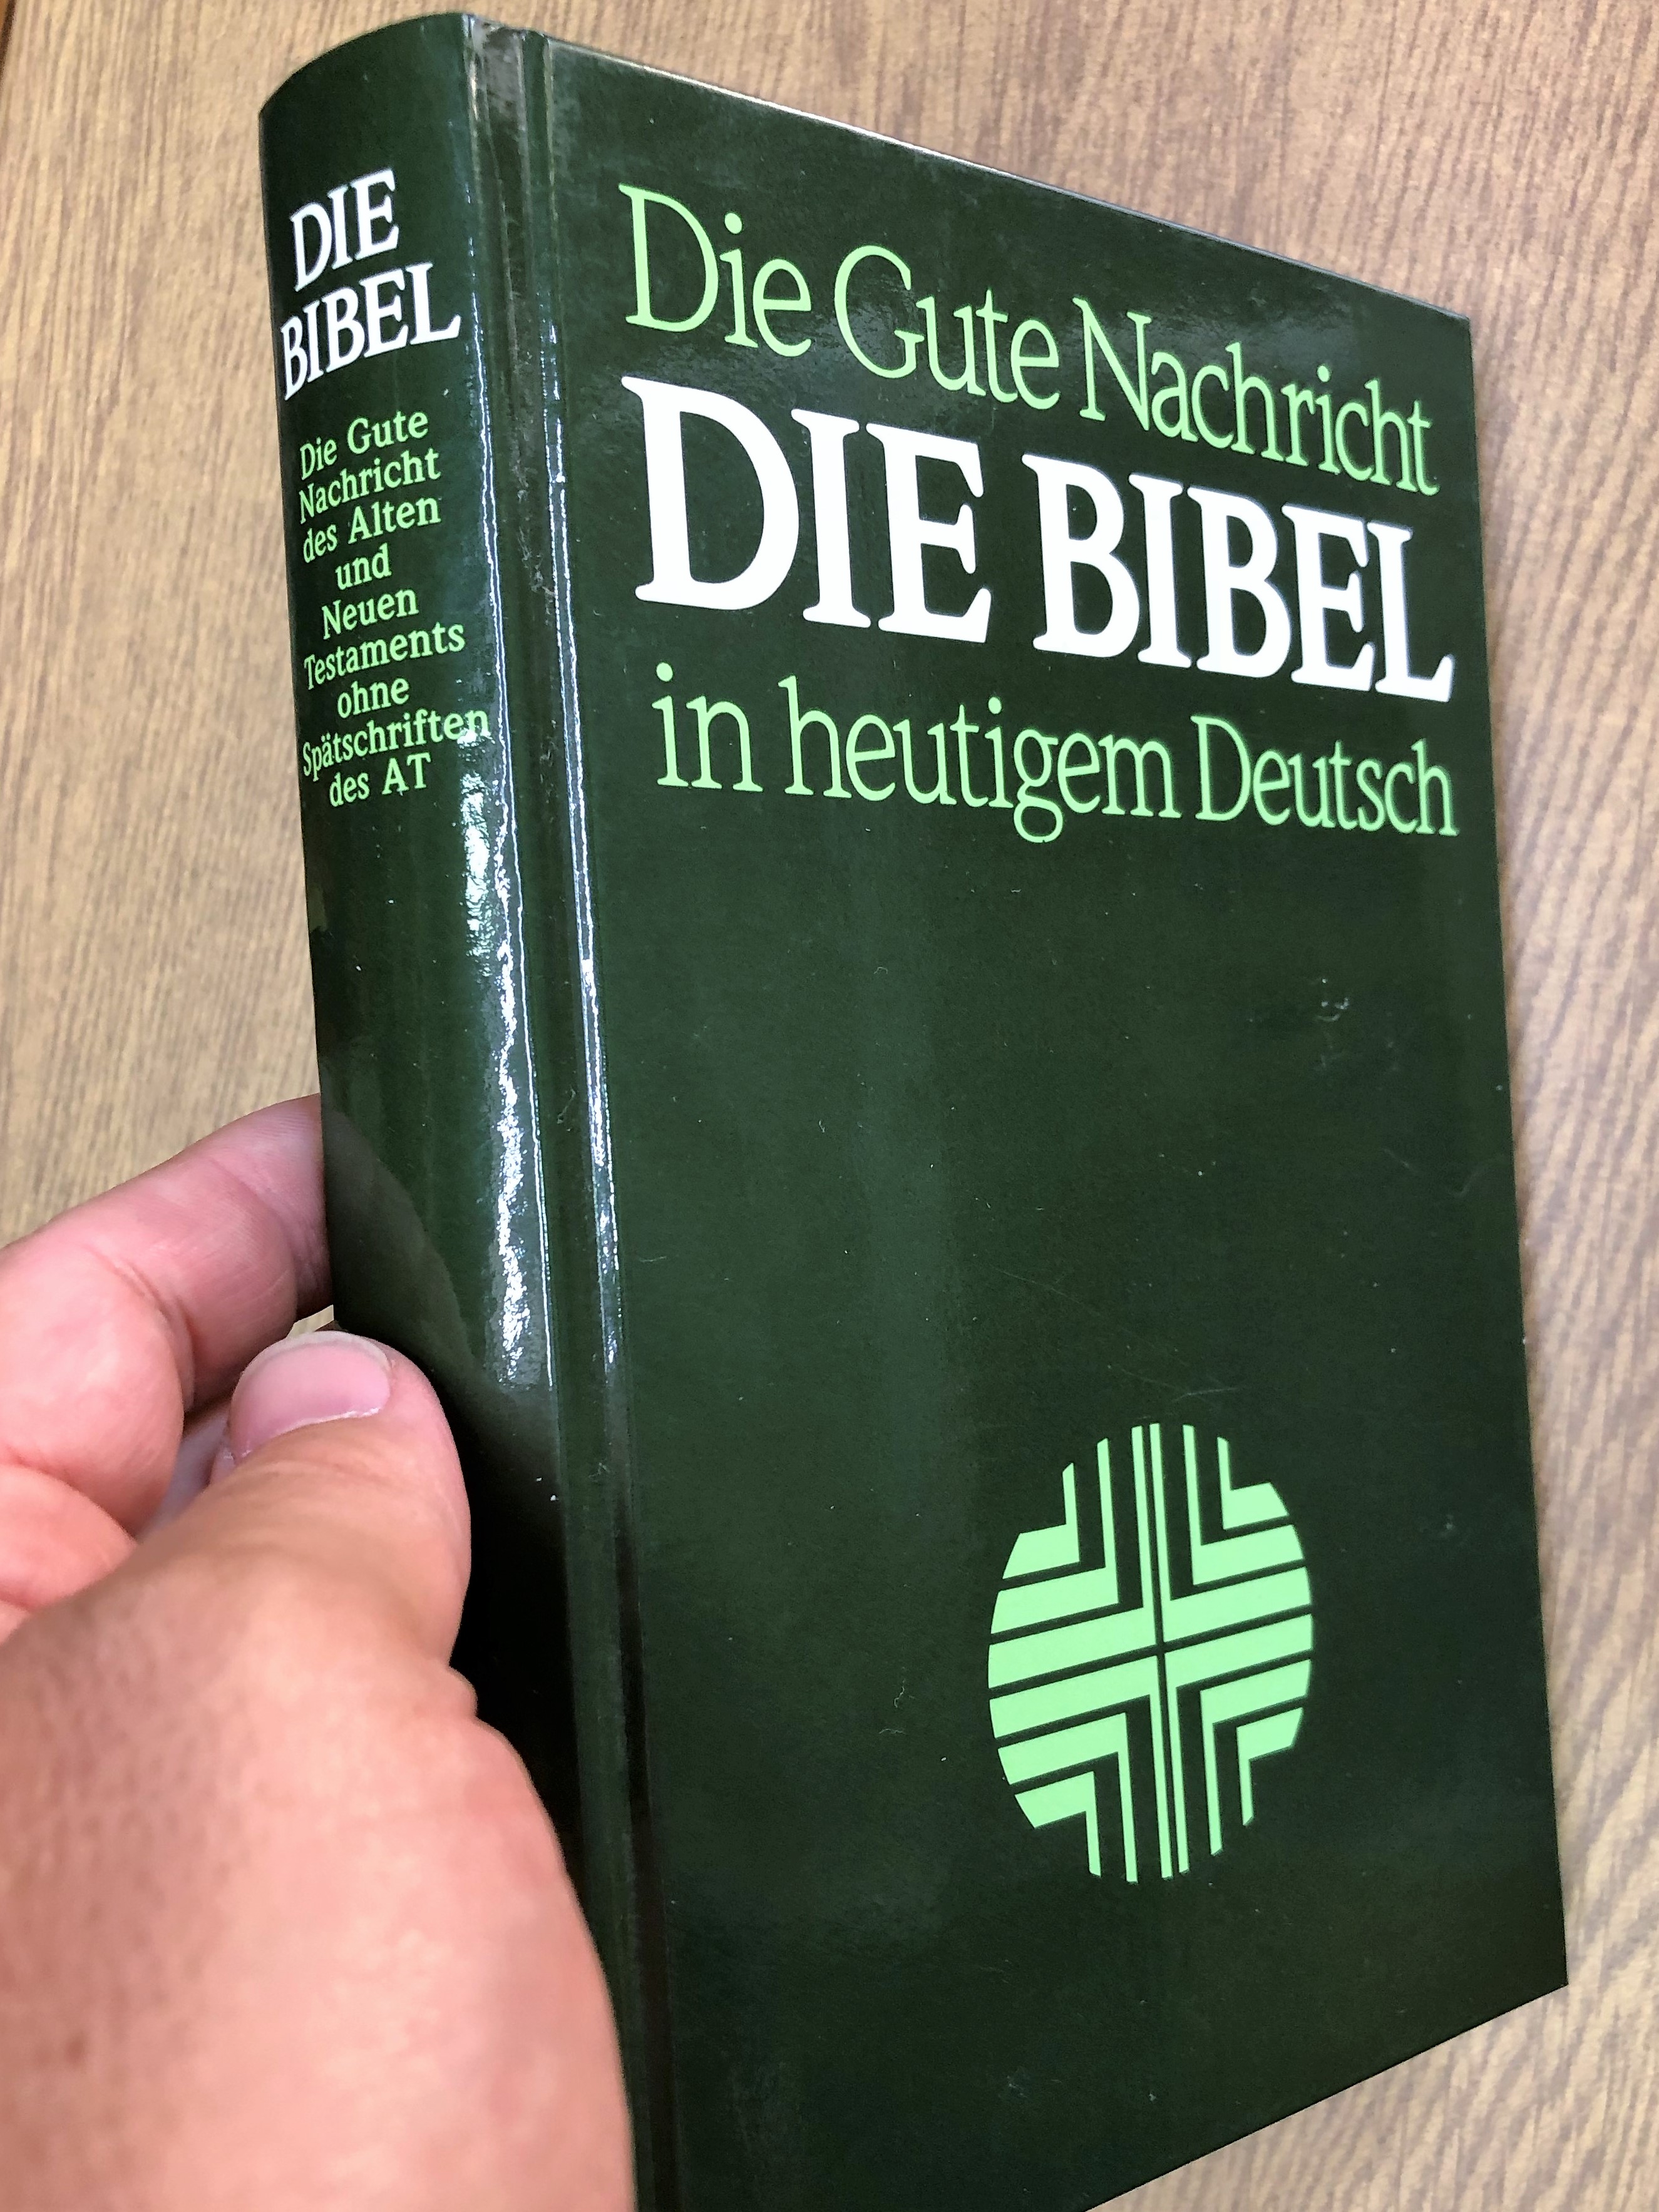 bible-in-today-s-german-language-23-.jpg